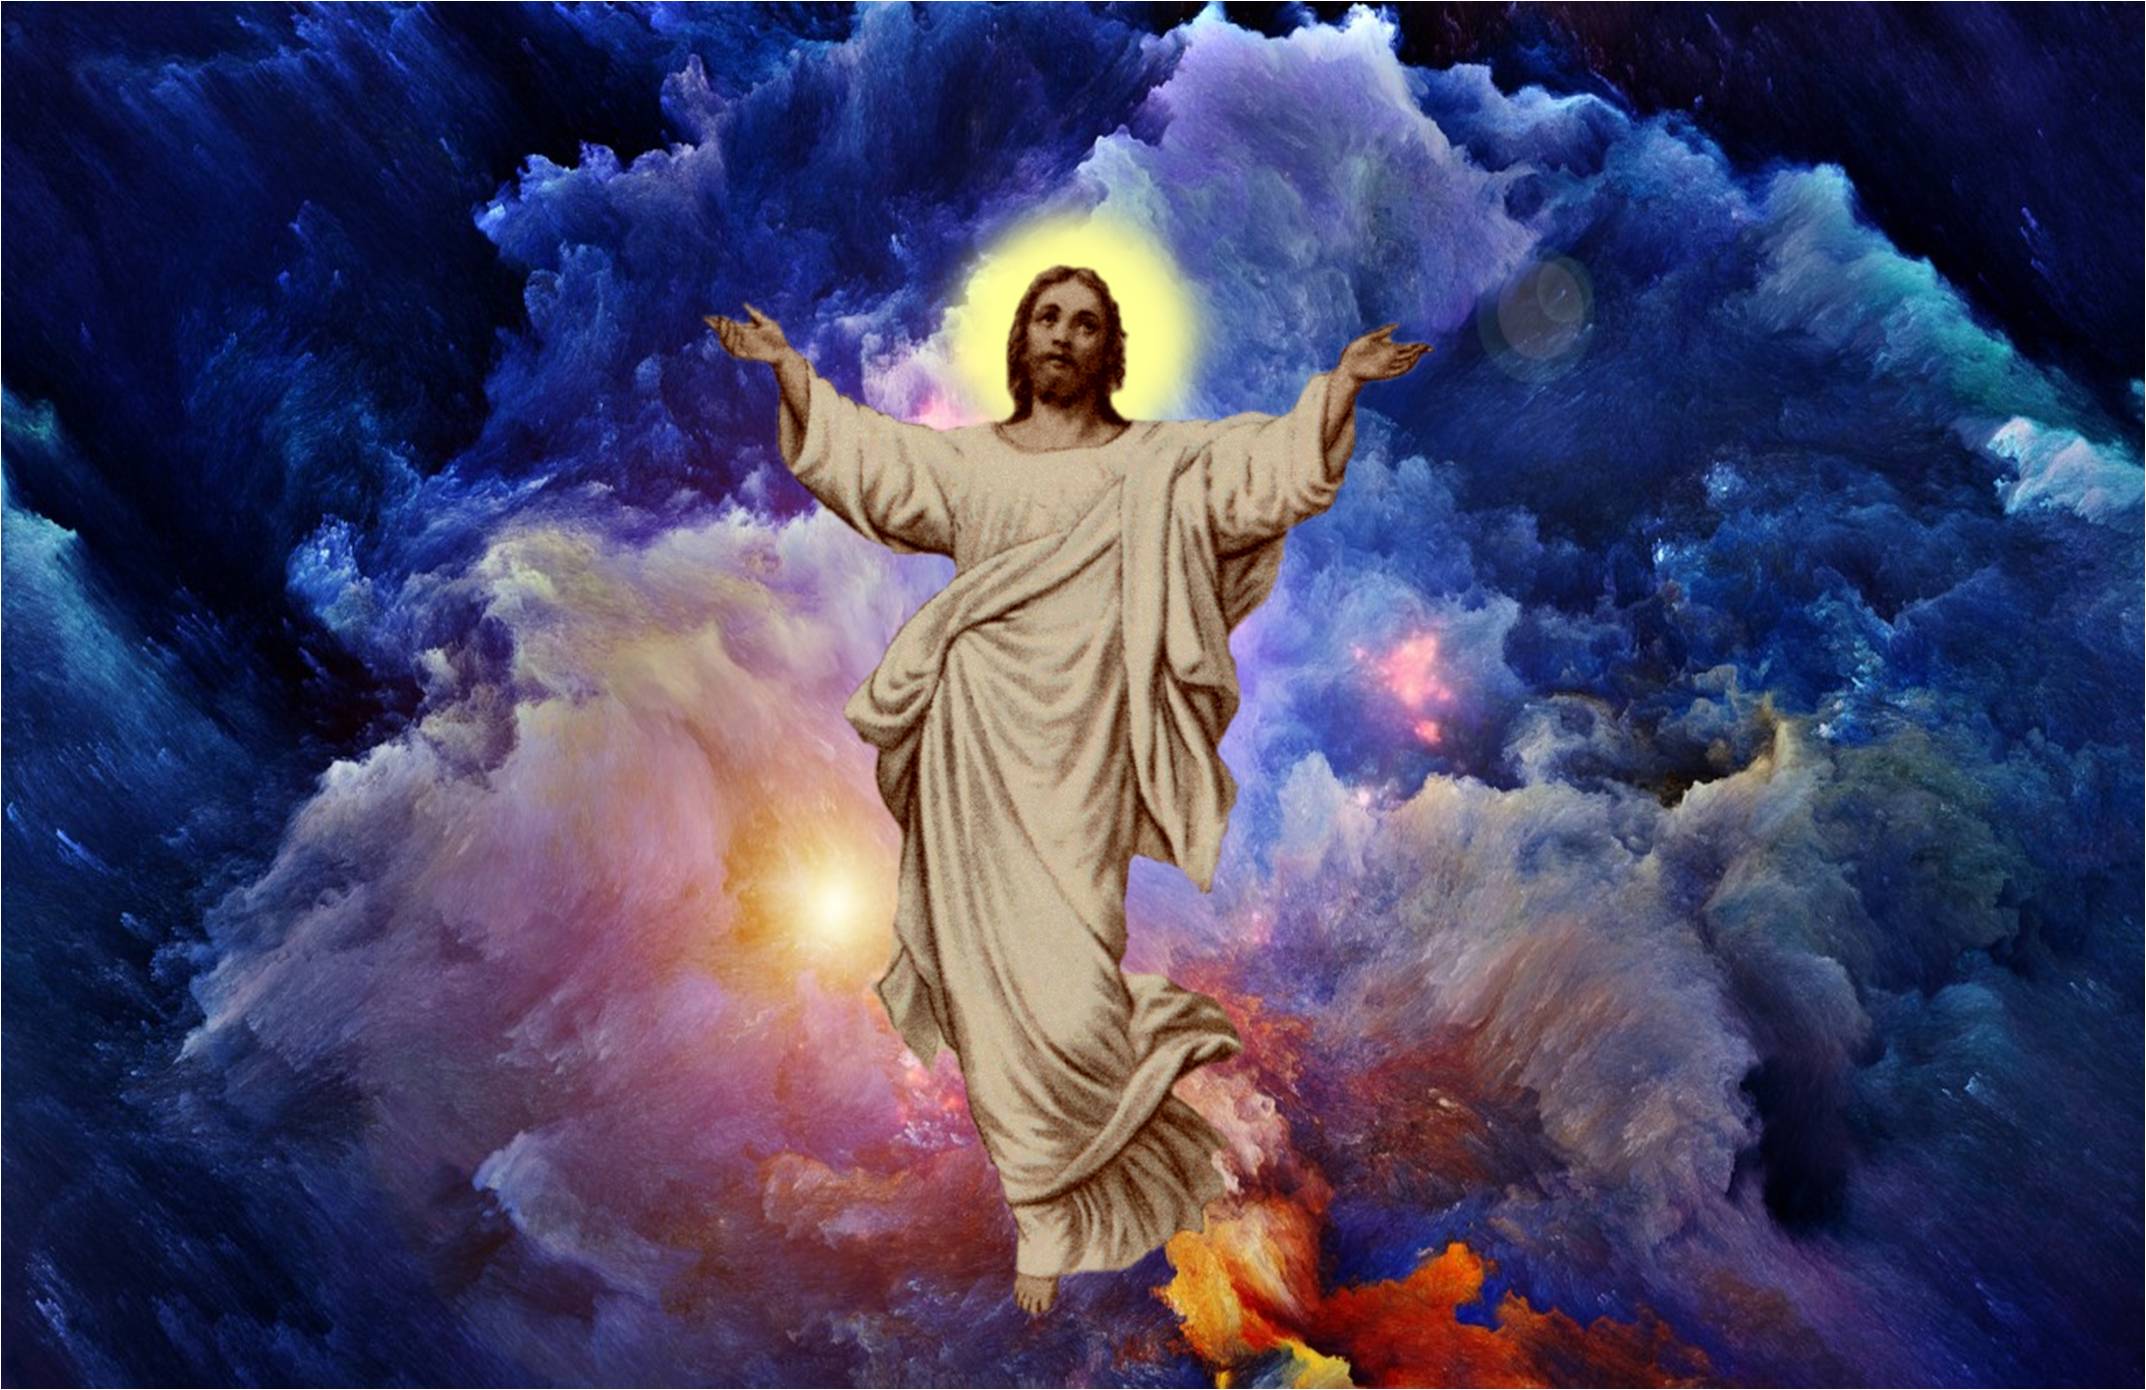 Free download Jesus Desktop Wallpaper Images 2146x1390 [2146x1390] for